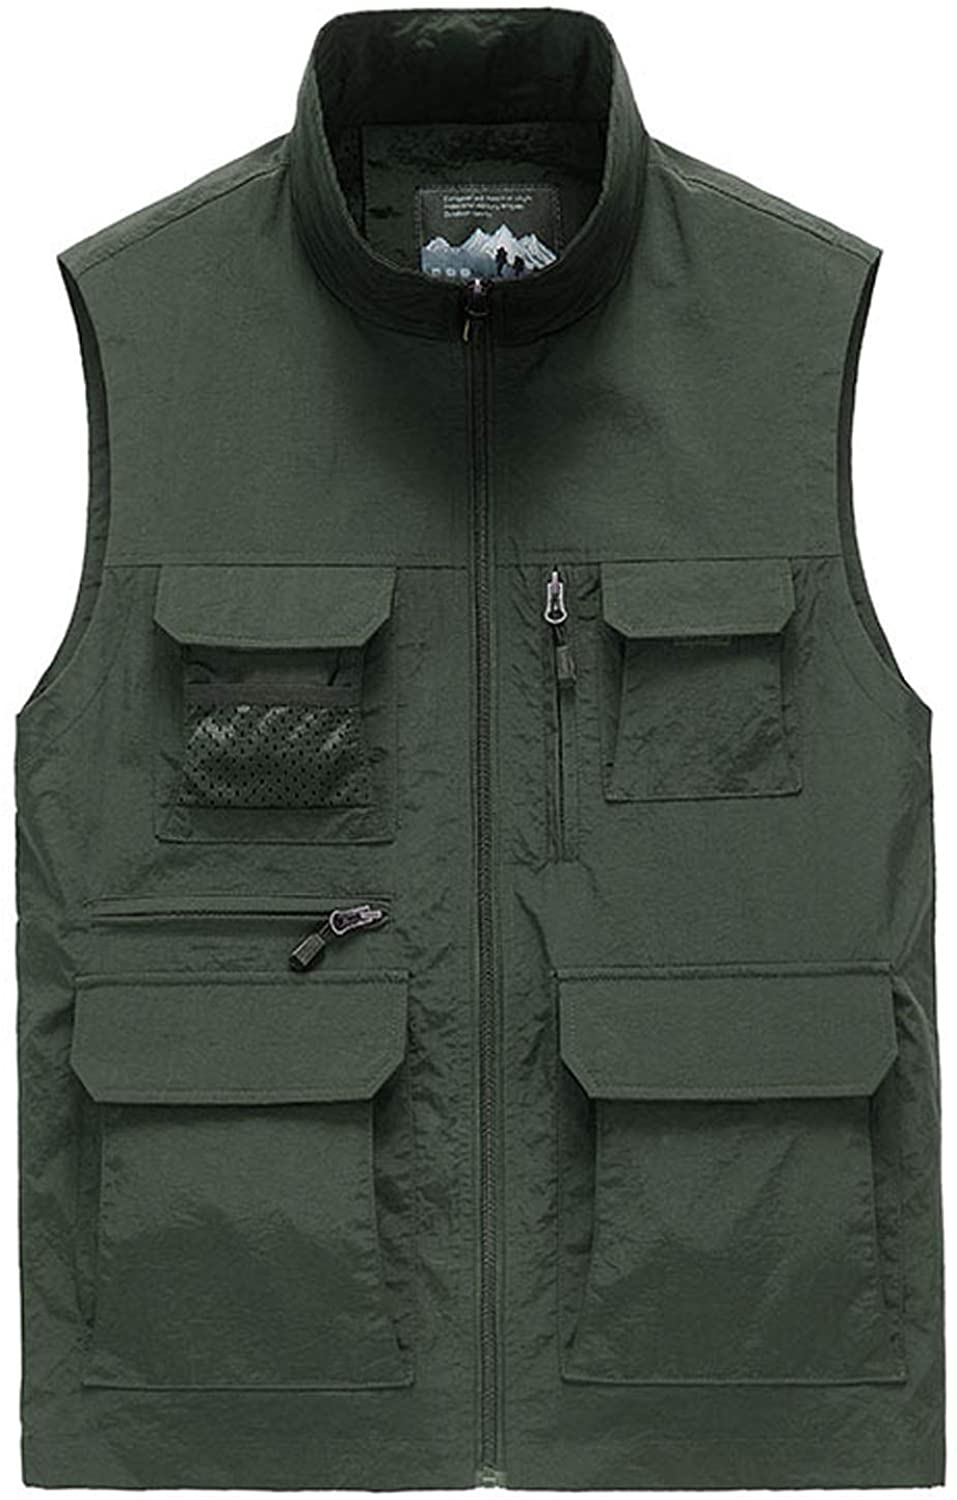 Flygo Men's Casual Lightweight Outdoor Travel Fishing Hunting Vest